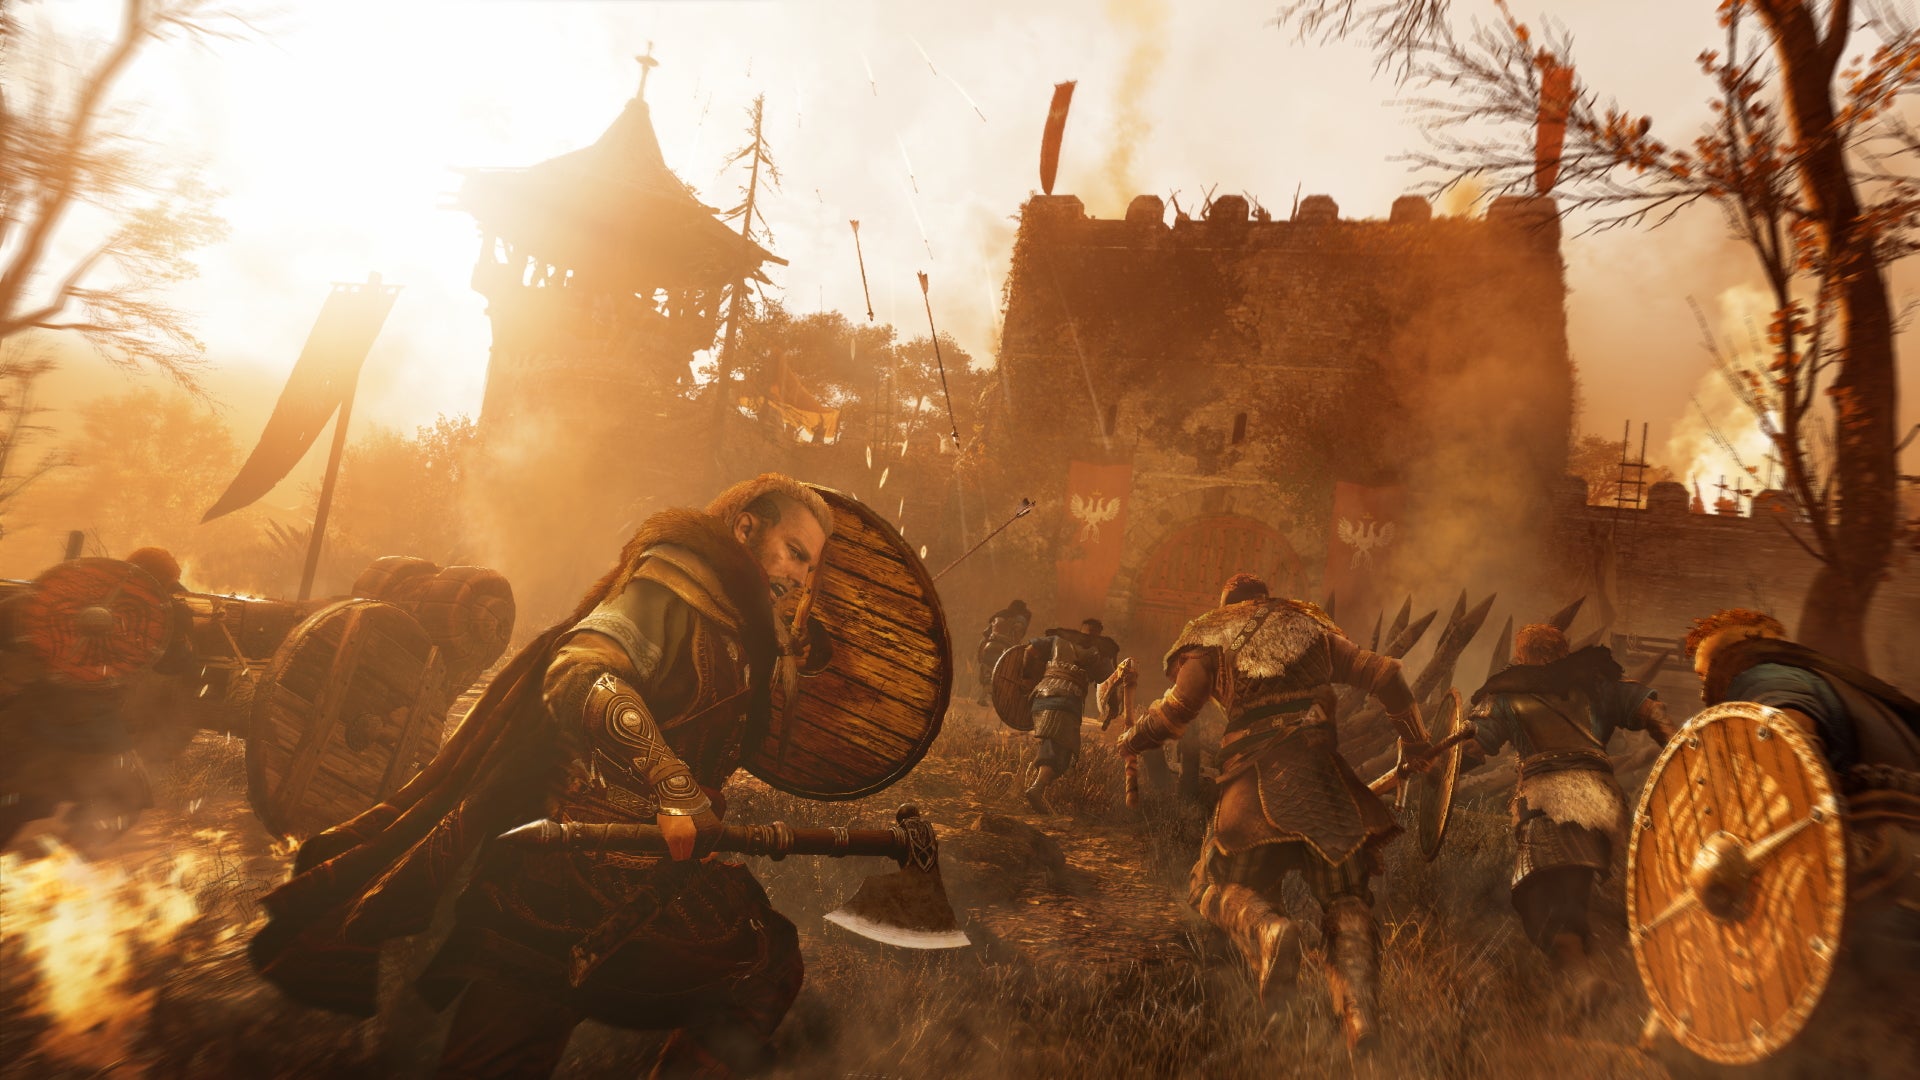 Ways Video Games Mess Up Vikings - raid targets were often churches